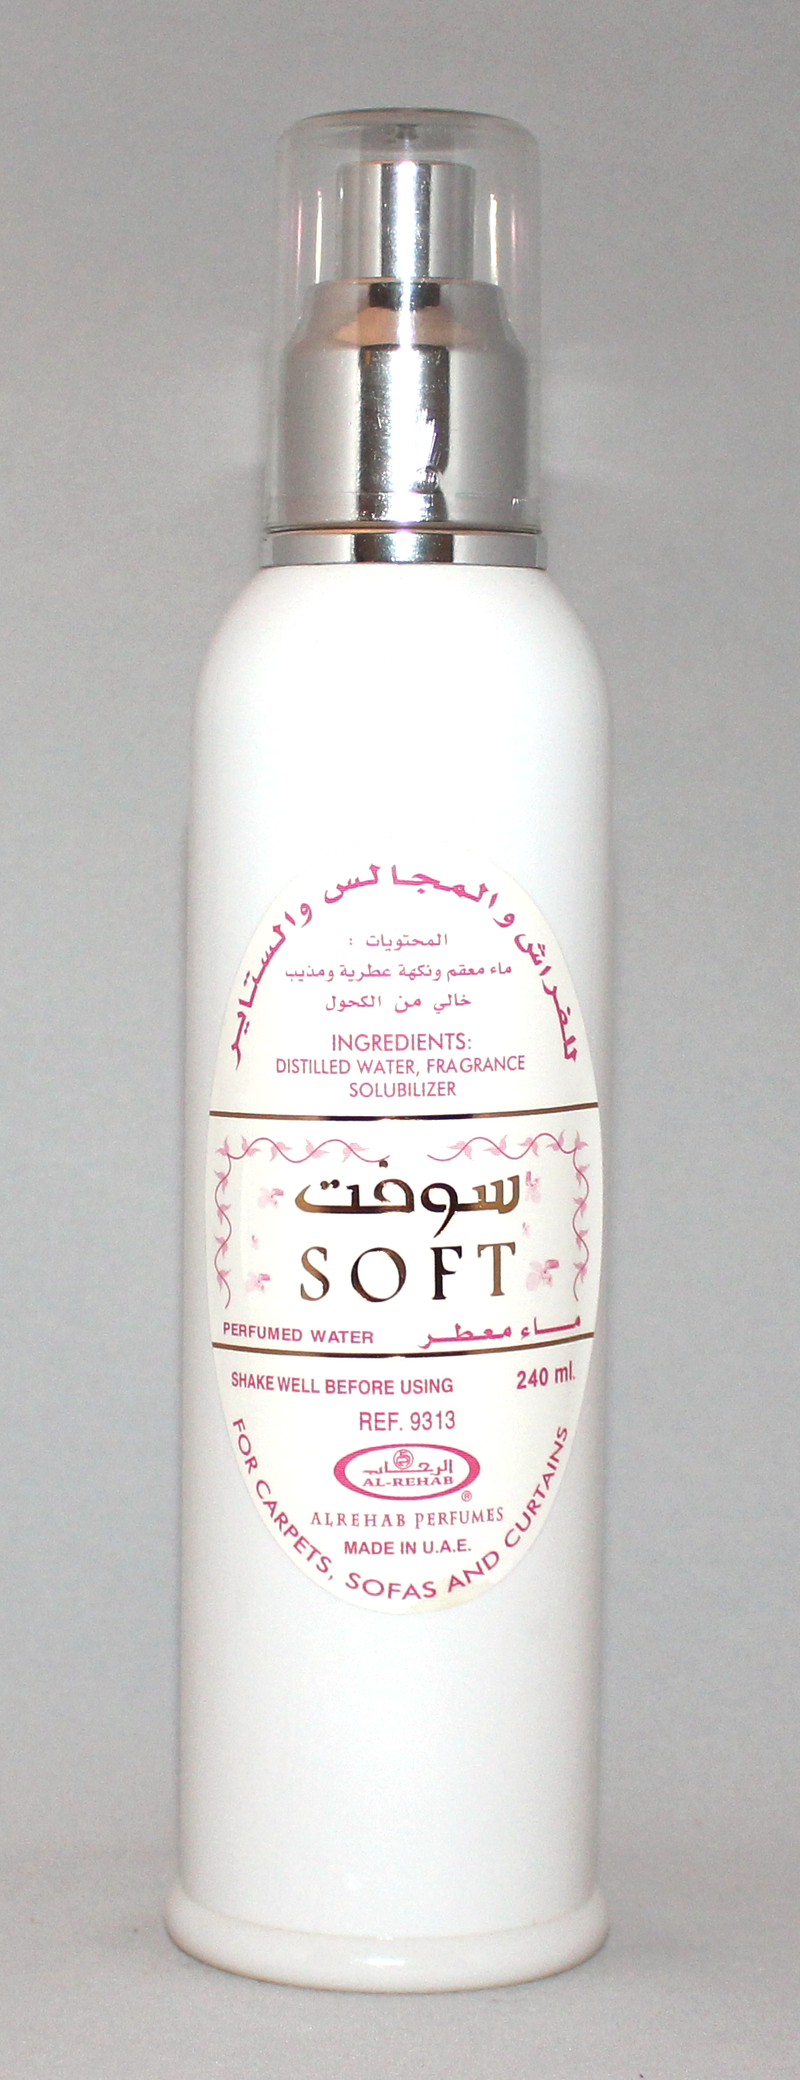 Soft  Room Freshener by Al-Rehab (240 ml) 